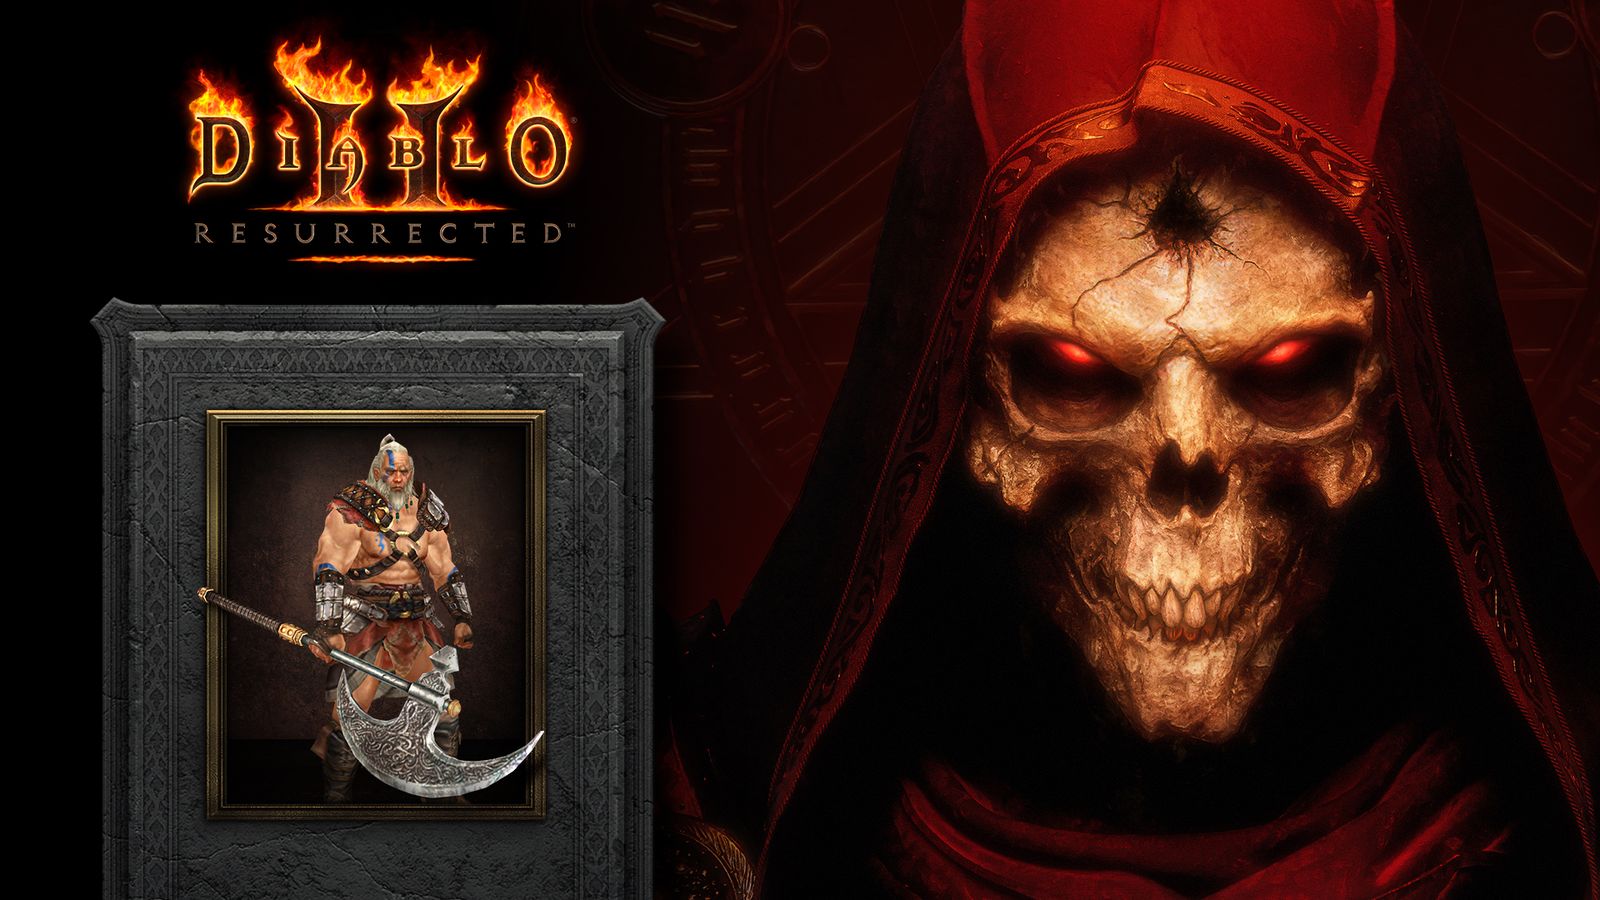 Diablo II themed Barbarian transmog in Dablo 3